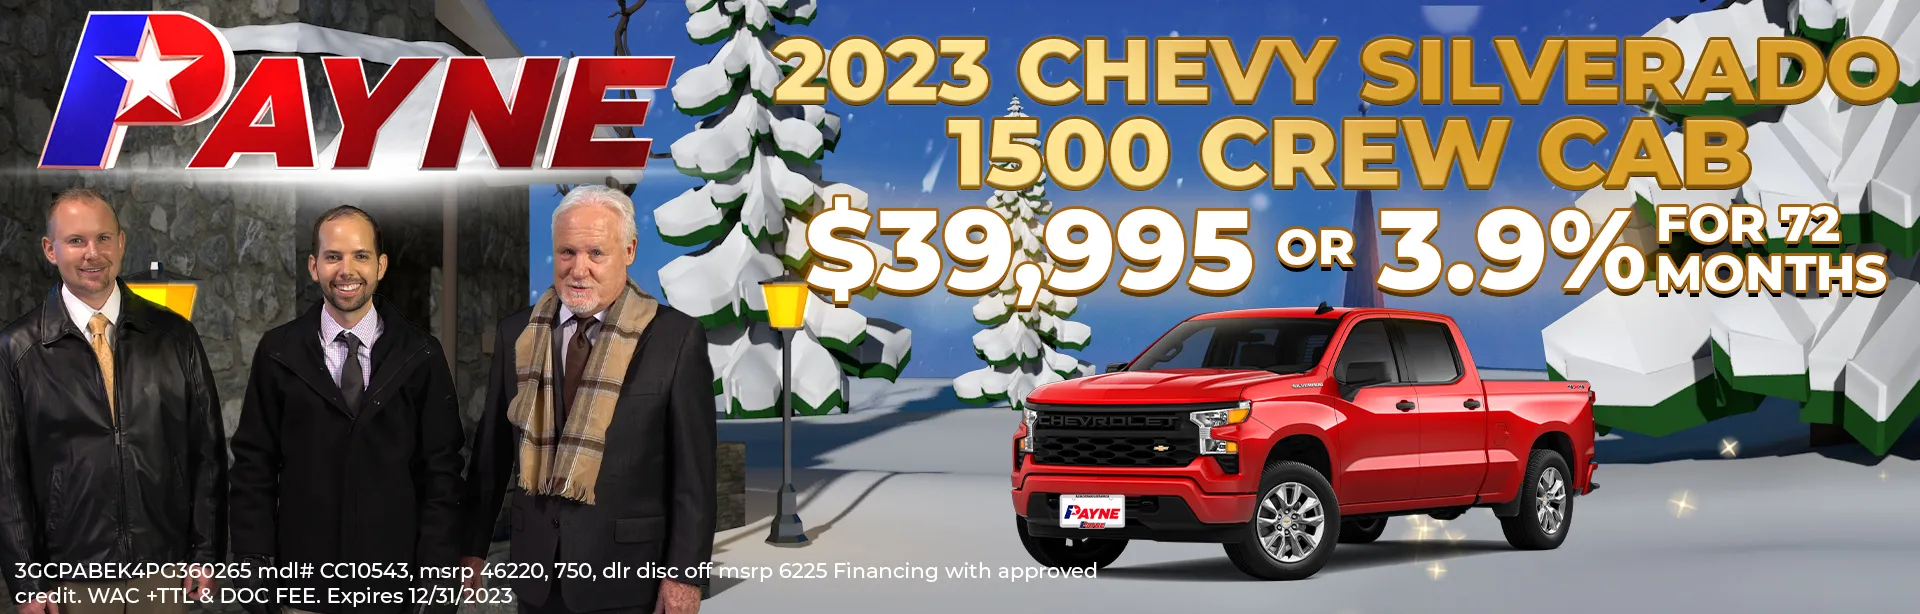 2023 Chevy Silverado 1500 $39,995 or 3.9% for 72 Months | Payne Chevrolet Buick GMC | Weslaco, TX